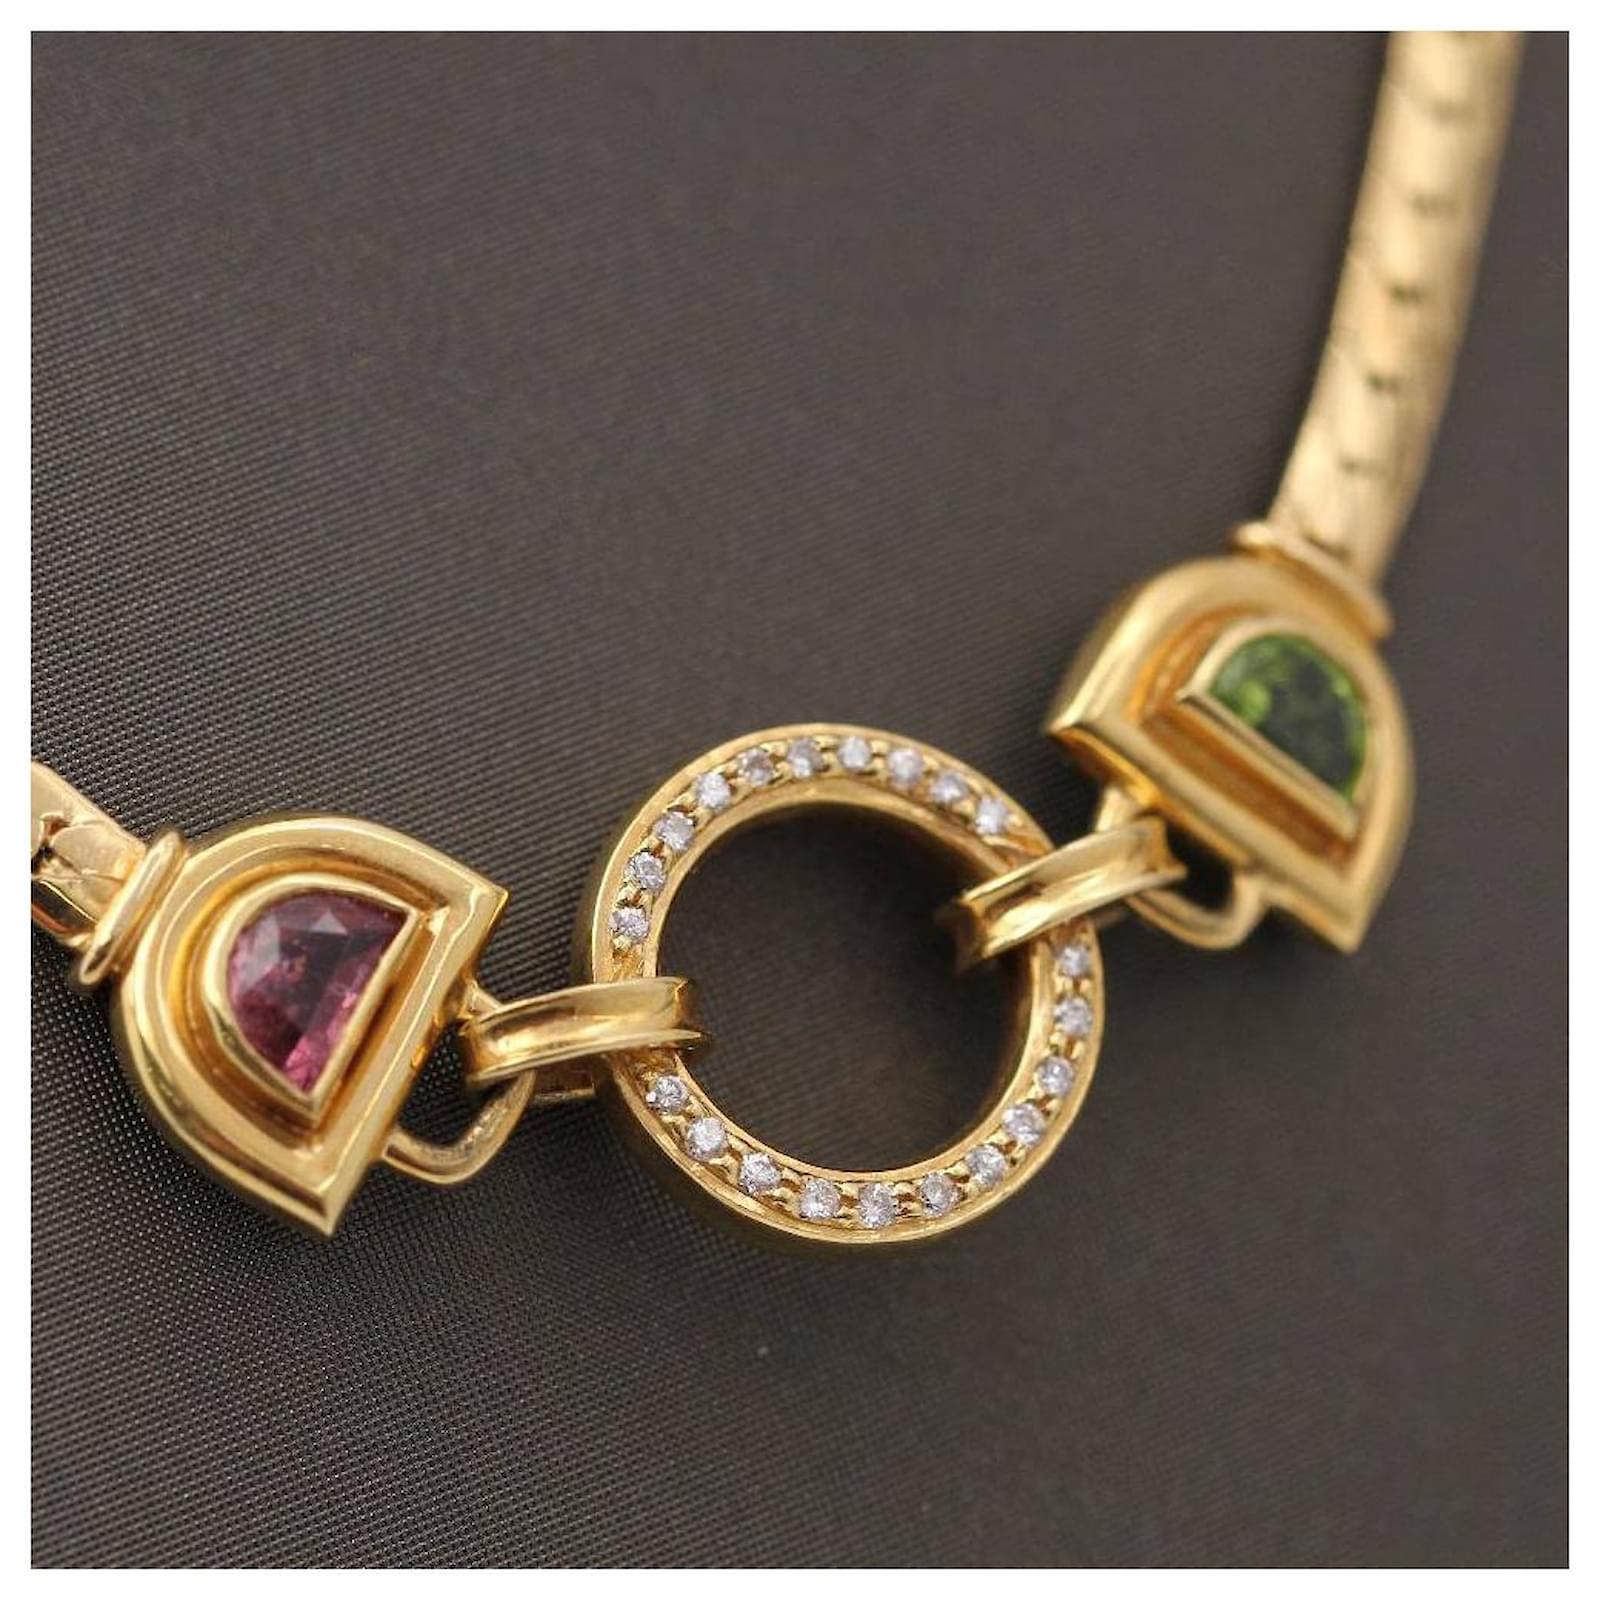 Ladies Necklace | Second Hand 9ct Gold Mandarin Citrine & White Topaz  Necklace | Citrine Stone